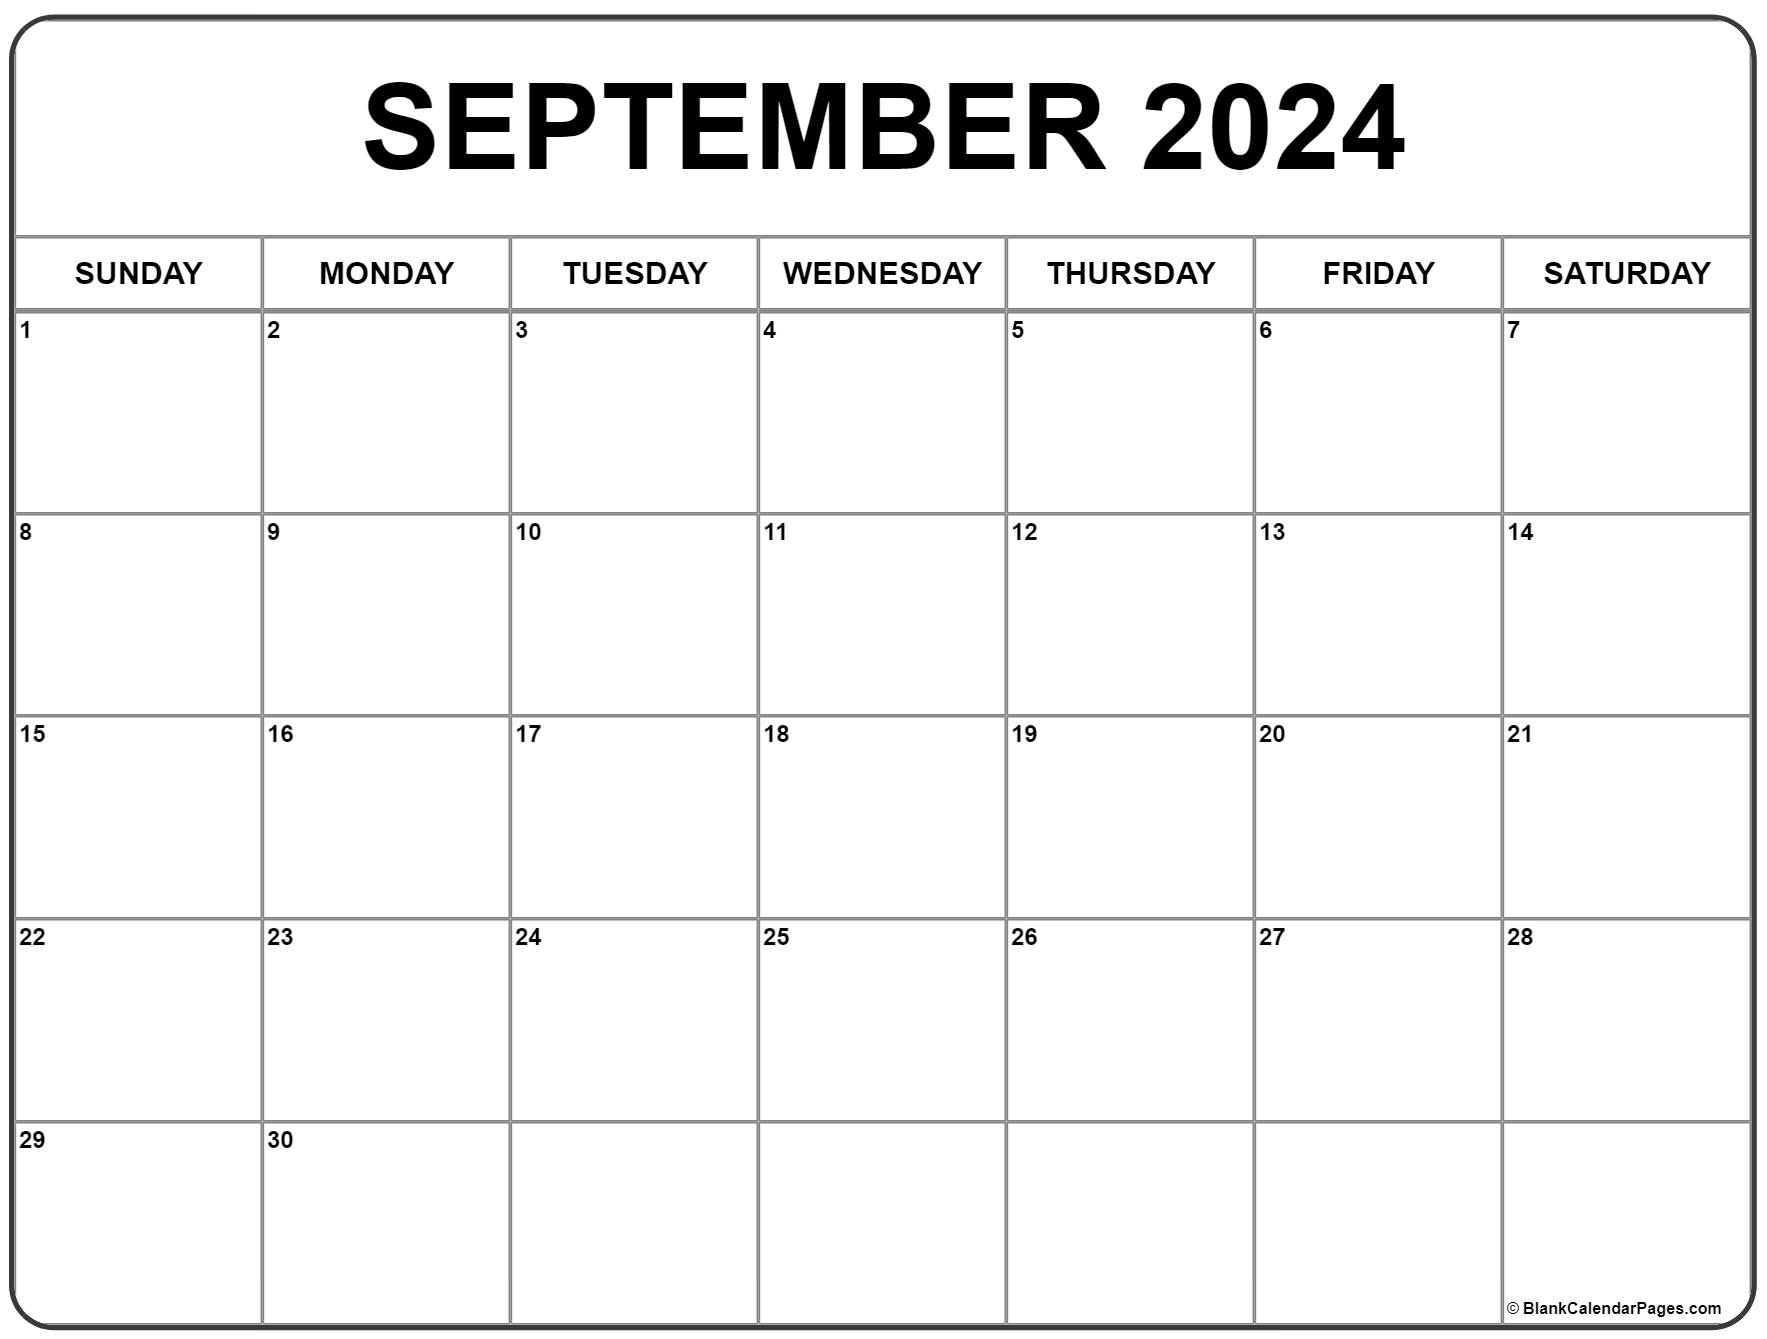 Print Blank Calendar 2022 September 2022 Calendar | Free Printable Calendar Templates